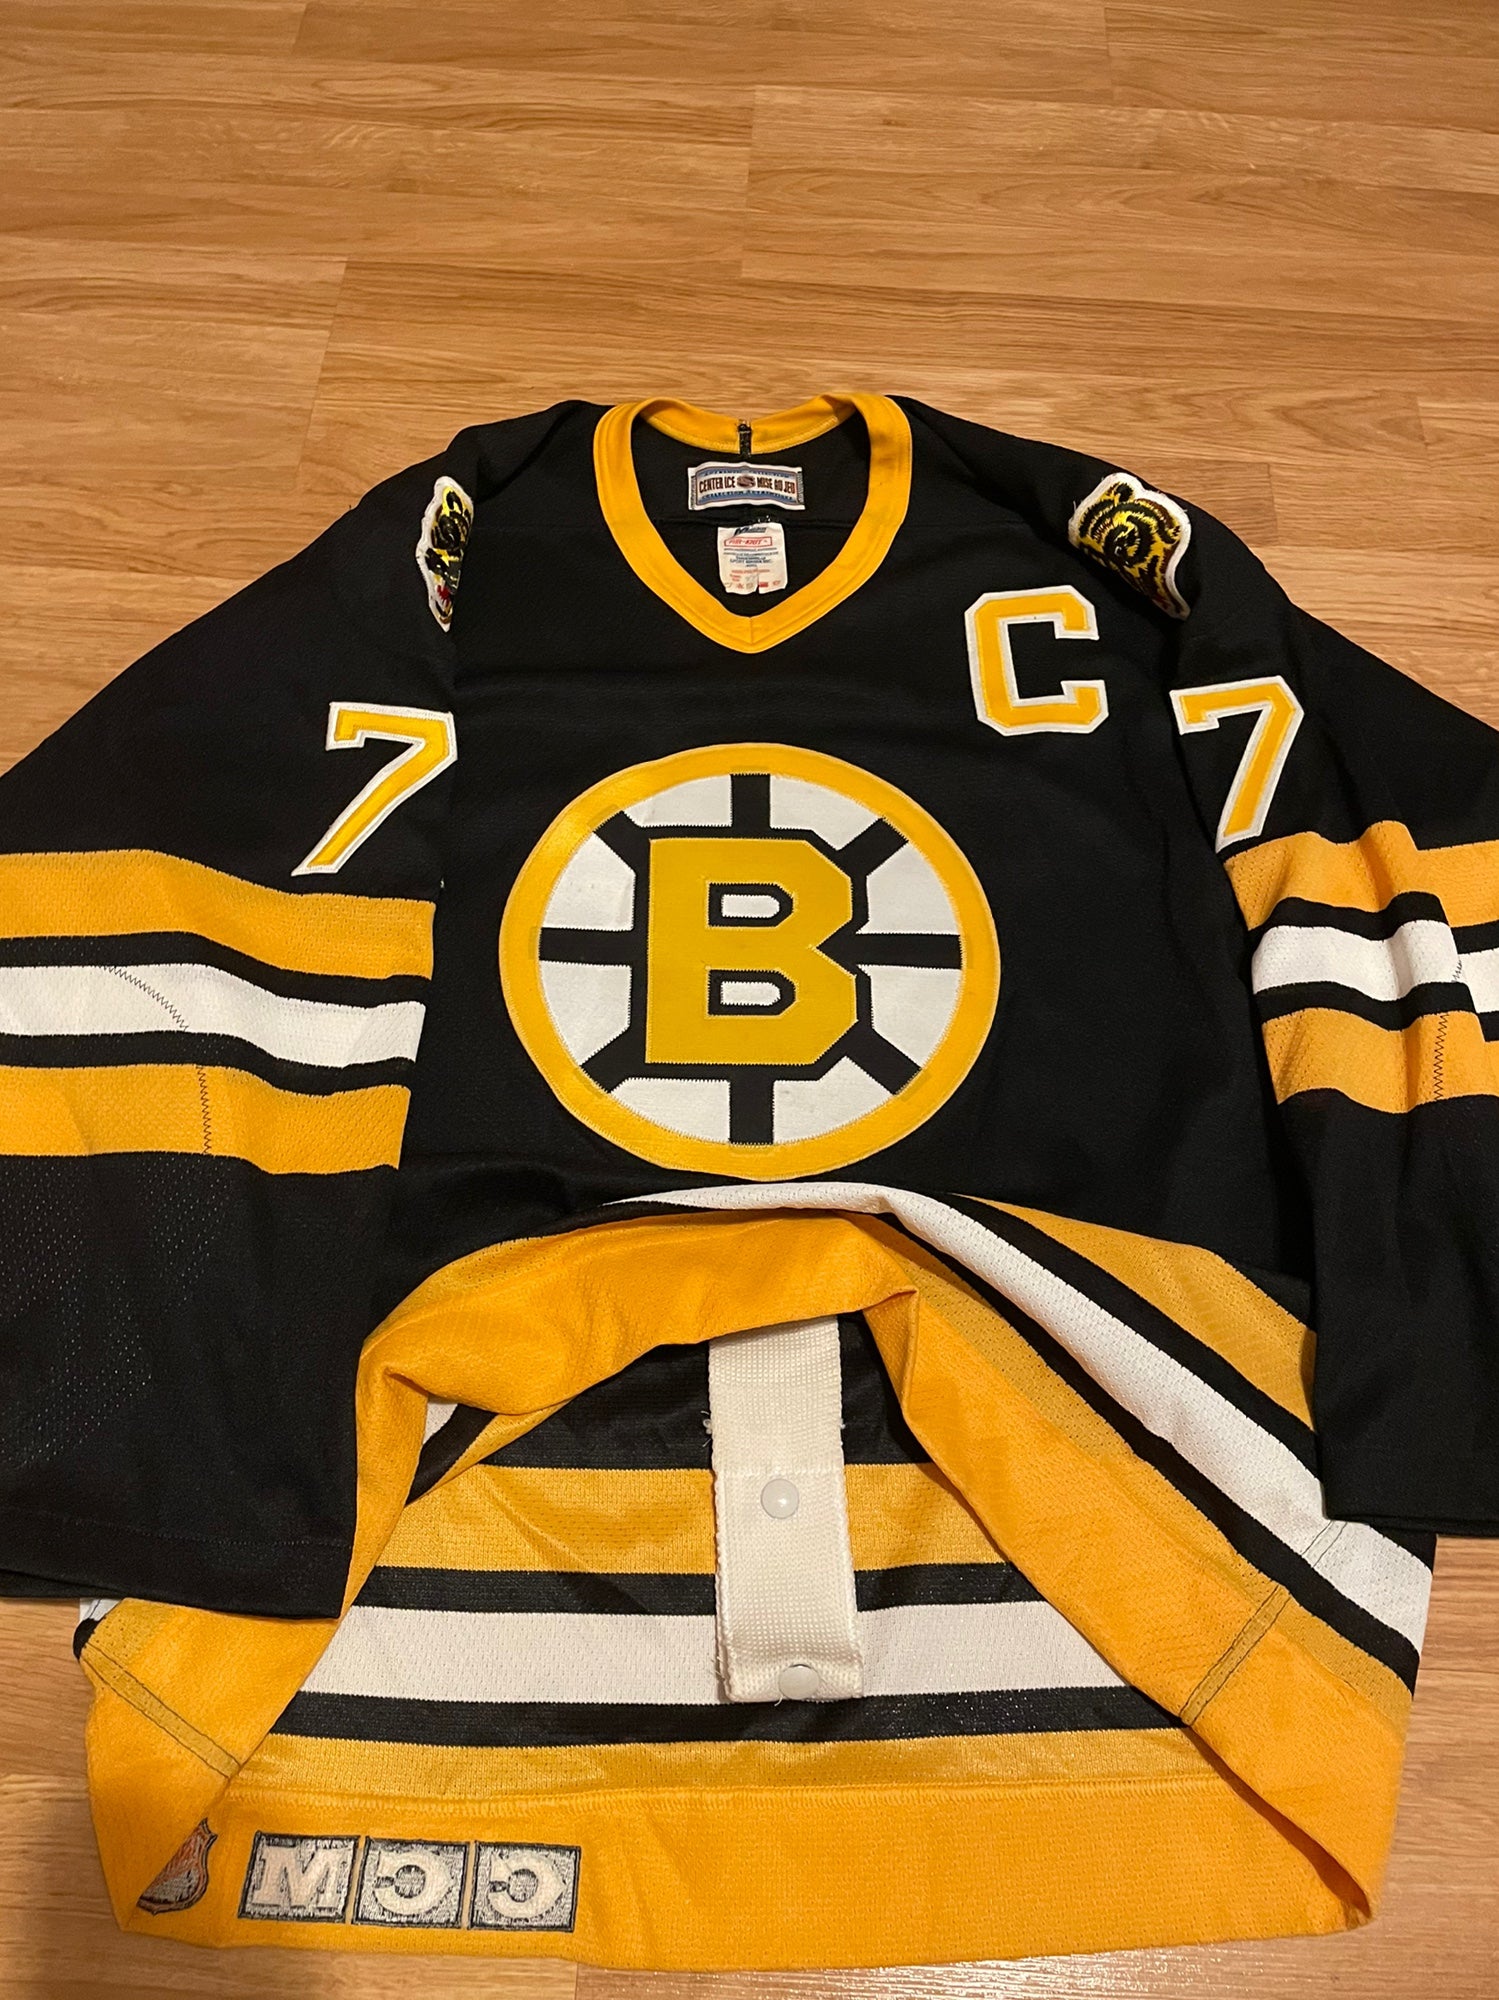 Boston Bruins NHL Vintage CCM Ice Hockey Jersey Shirt Black Gold Mens Small  S